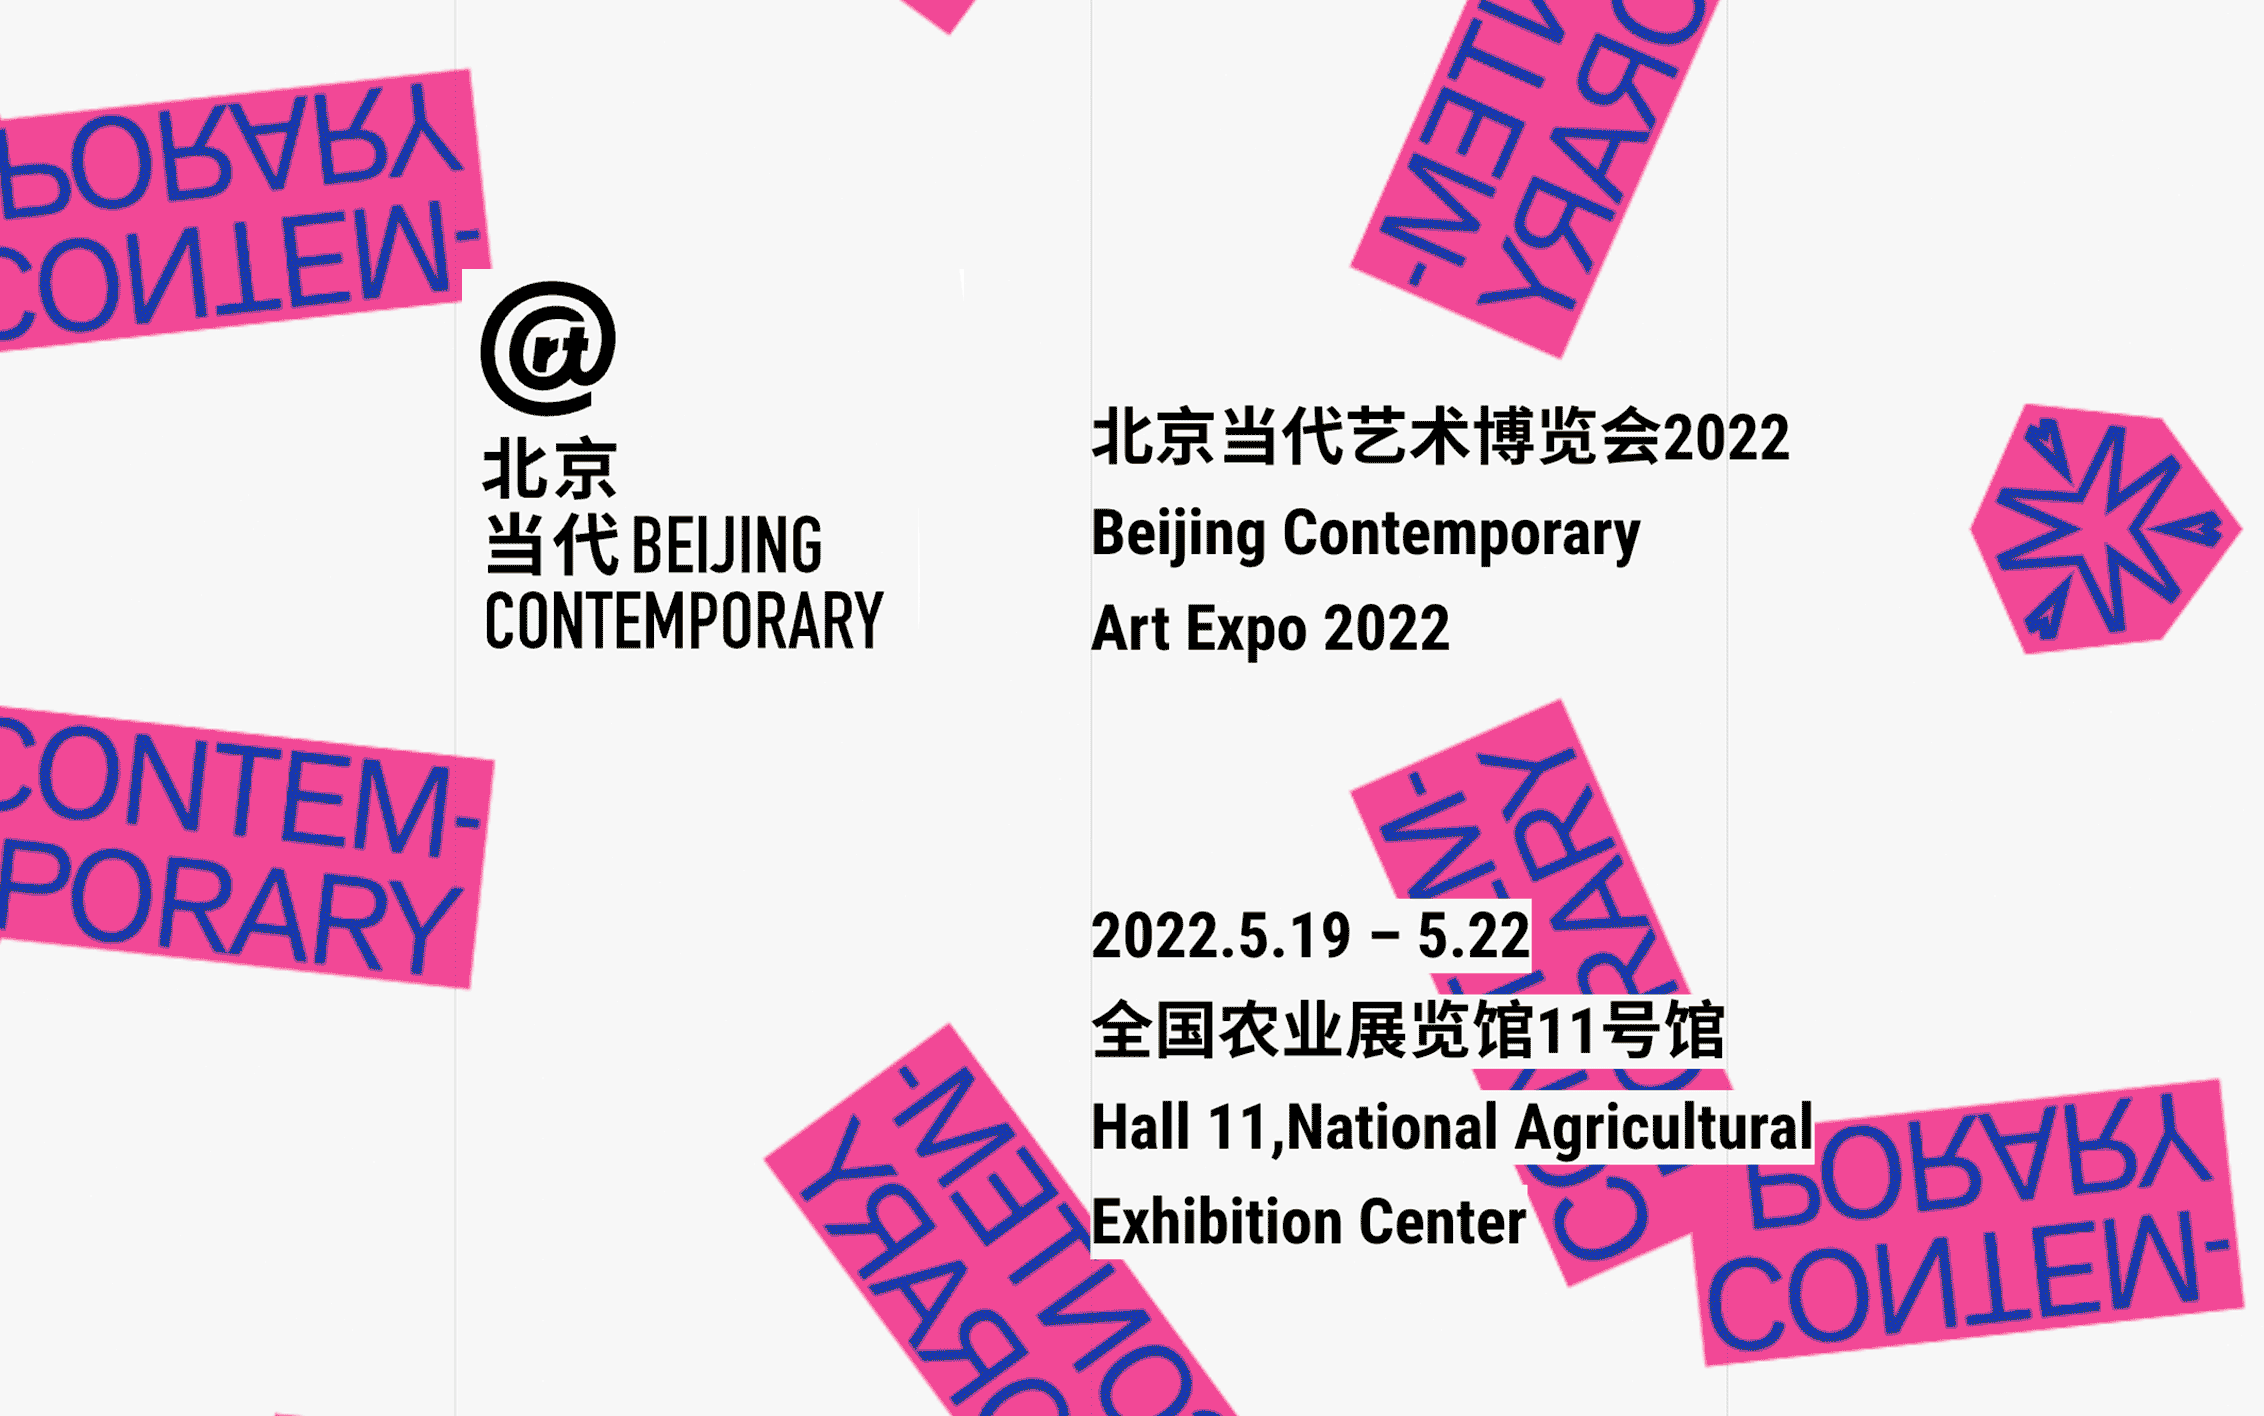 Contemporary art art fair, Beijing Contemporary Art Expo 2022 at Yavuz Gallery, Singapore